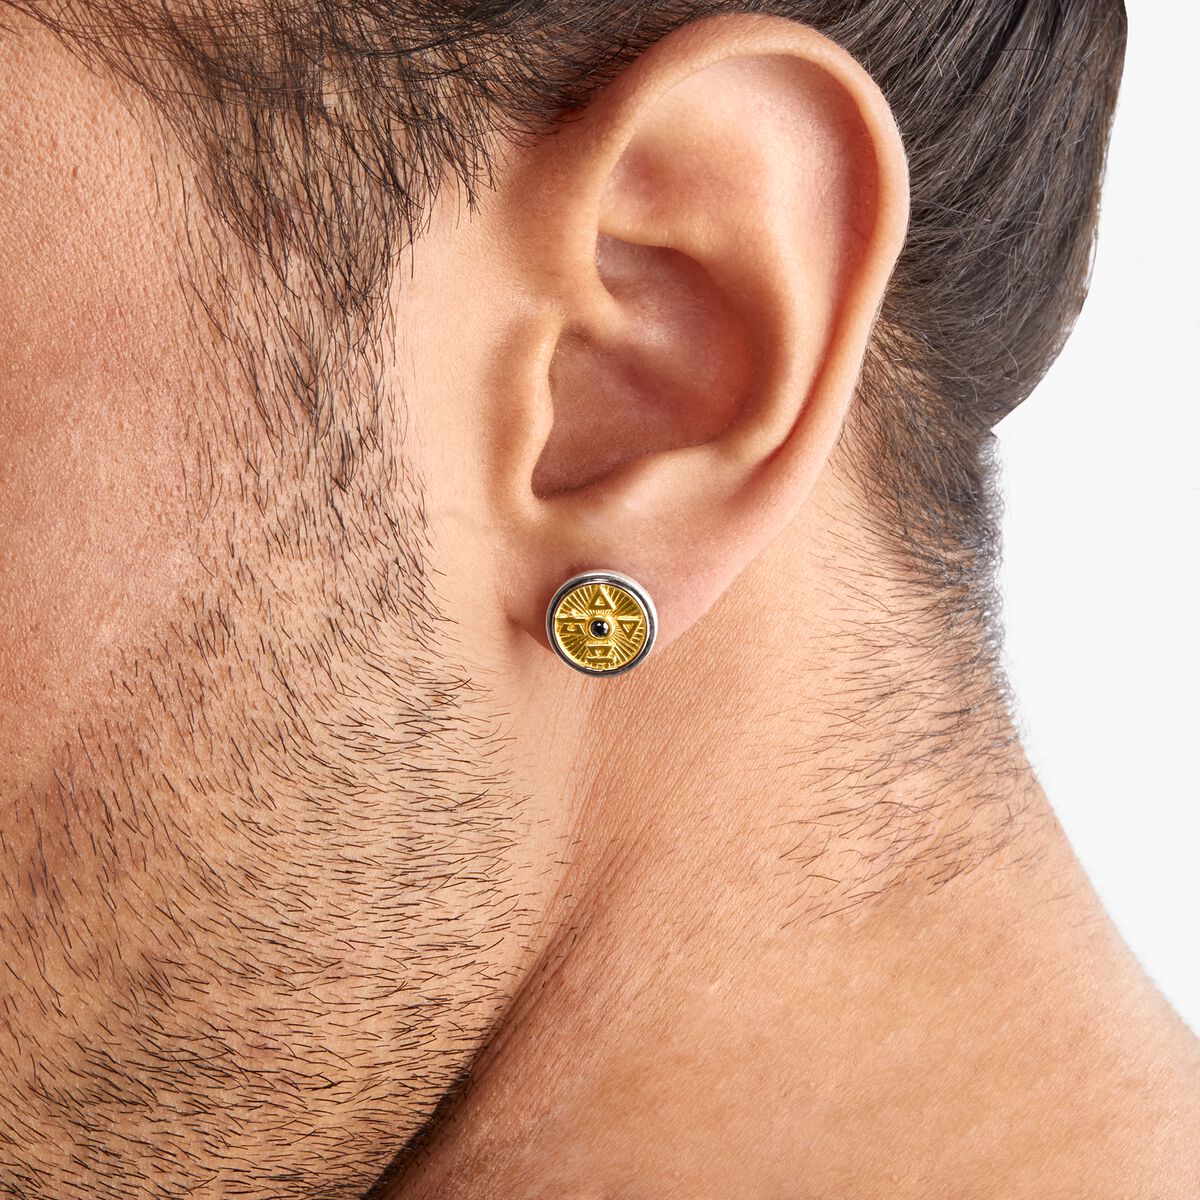 Ear studs in modern THOMAS bi-colour SABO | design